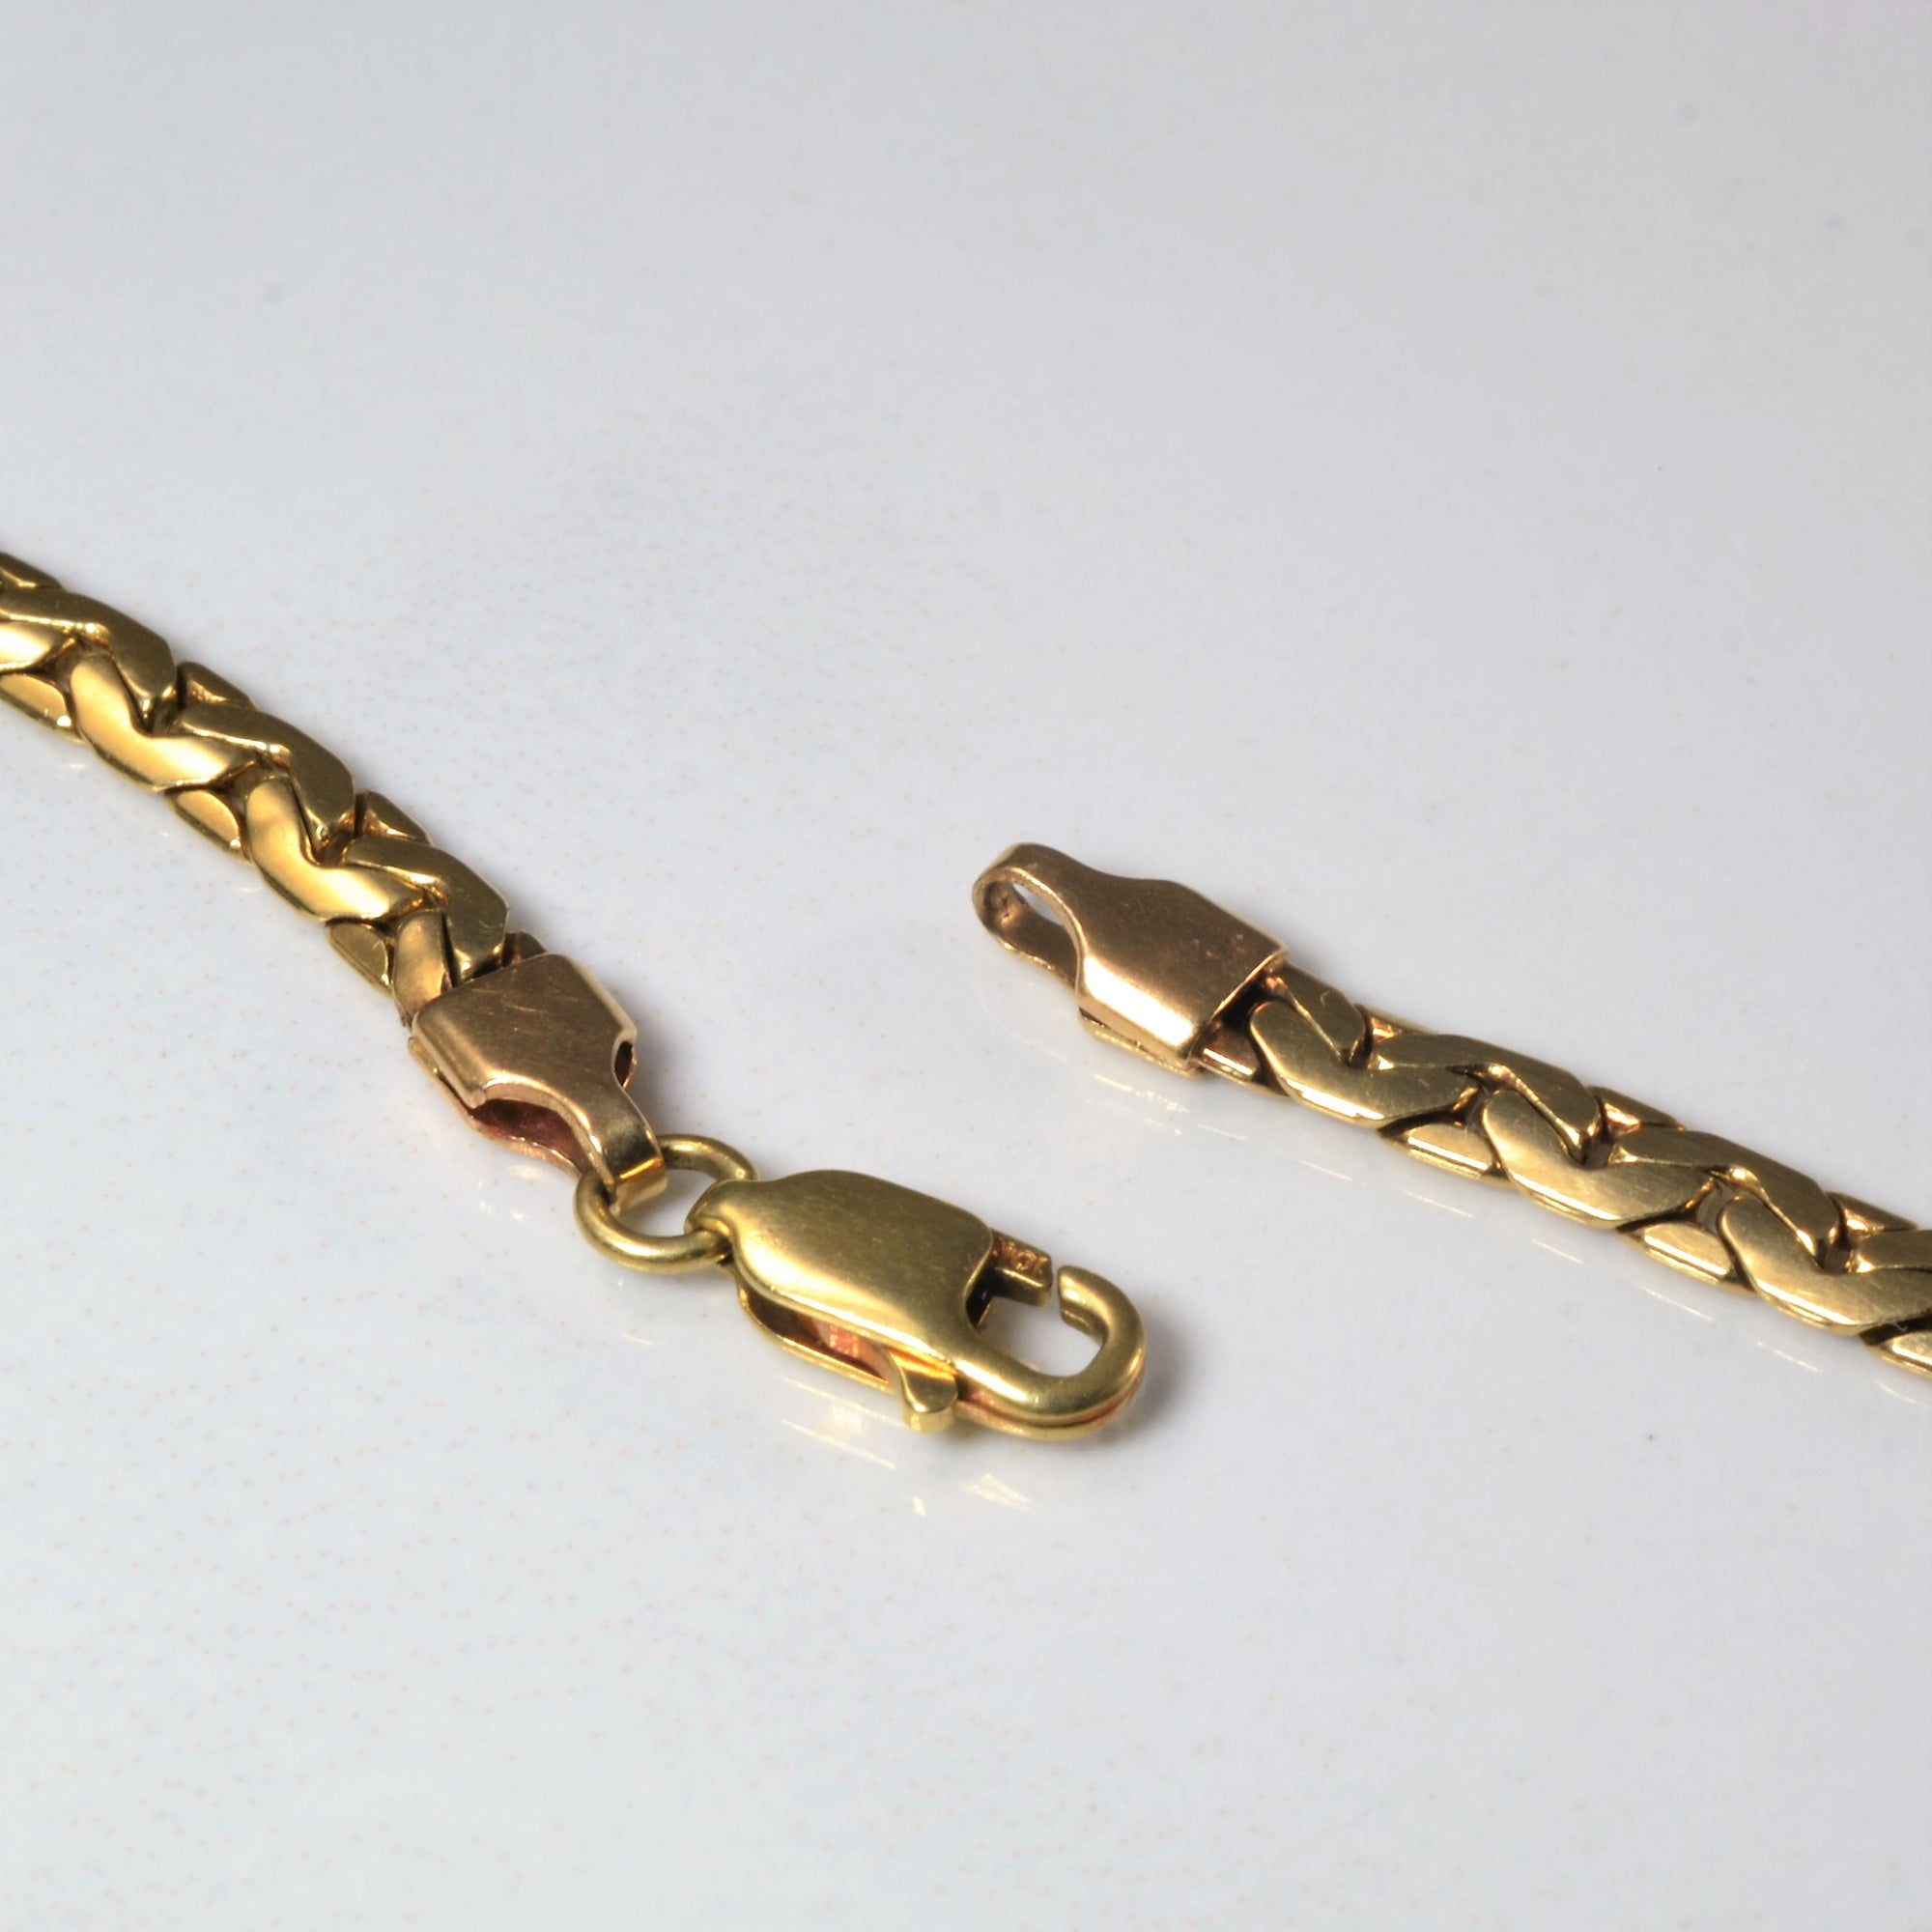 10k Yellow Gold Serpentine Chain | 19.5